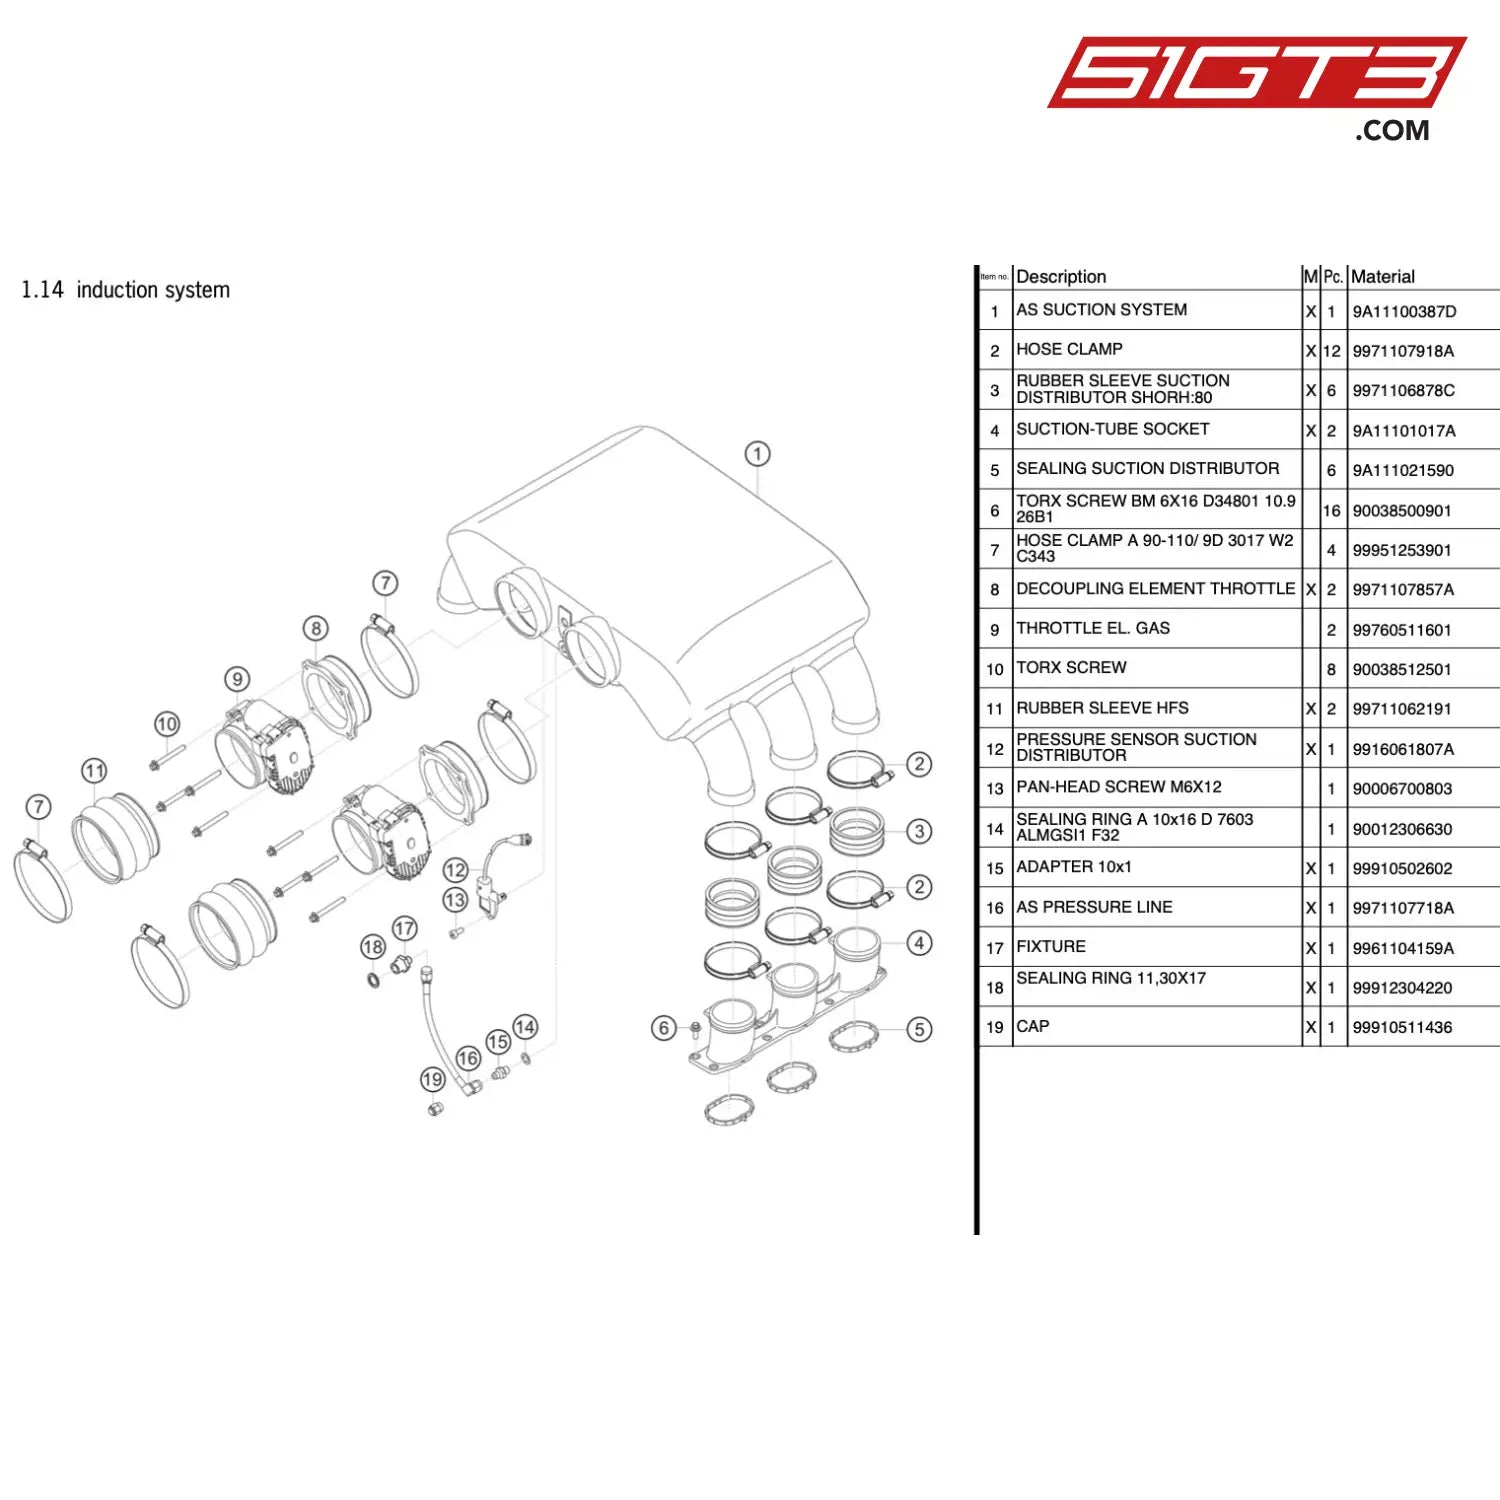 Sealing Ring 11 30X17 - 99912304220 [Porsche 911 Gt3 R Type 991 (Gen 1)] Induction System